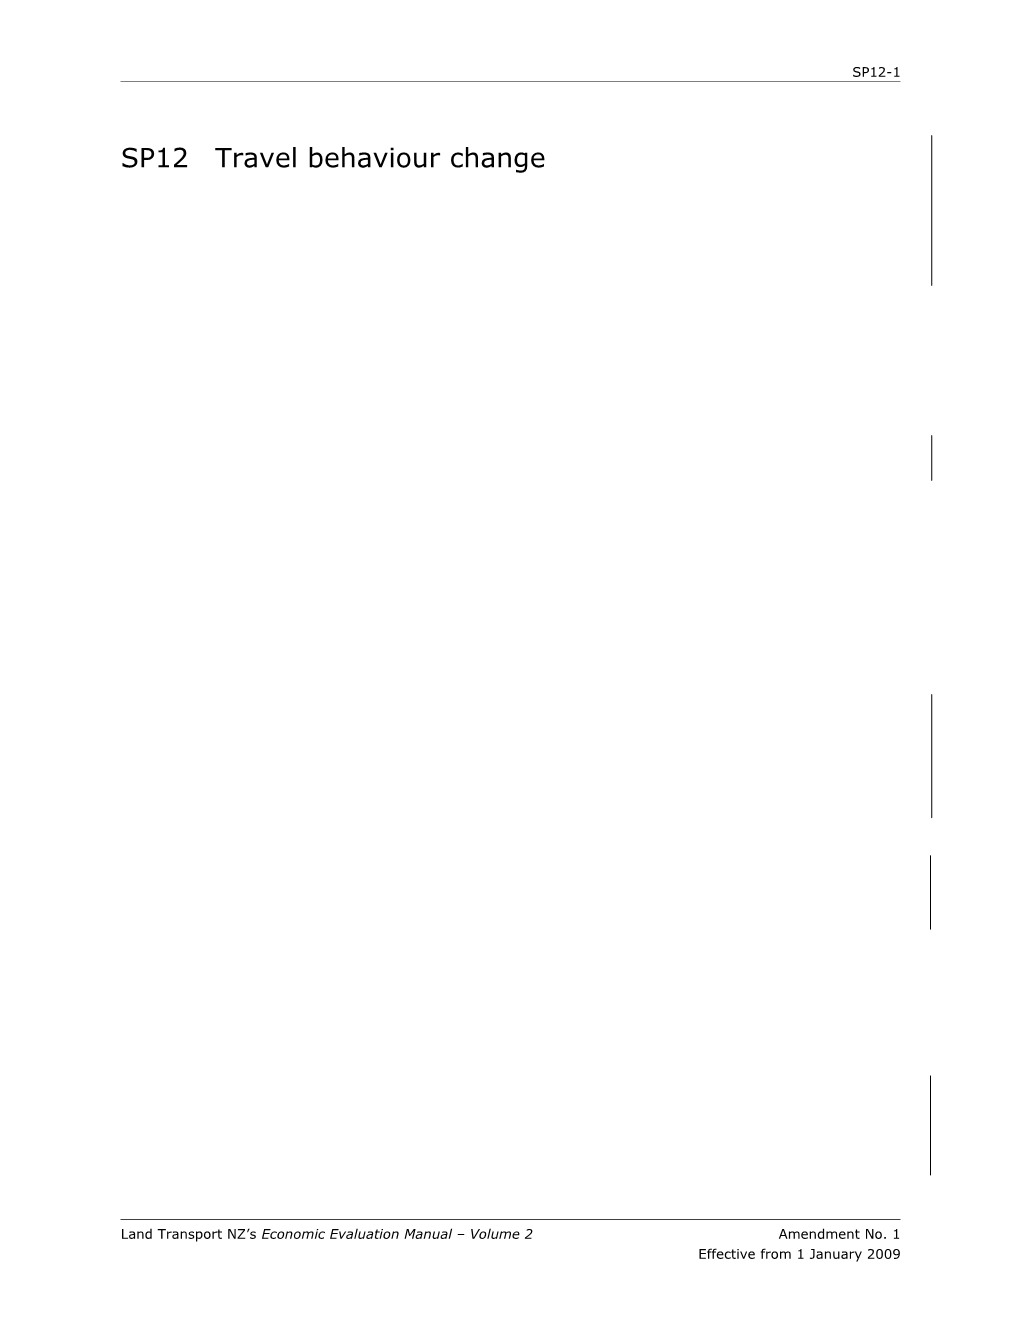 Economic Evaluation Manual - Volume 2 Travel Behaviour Change